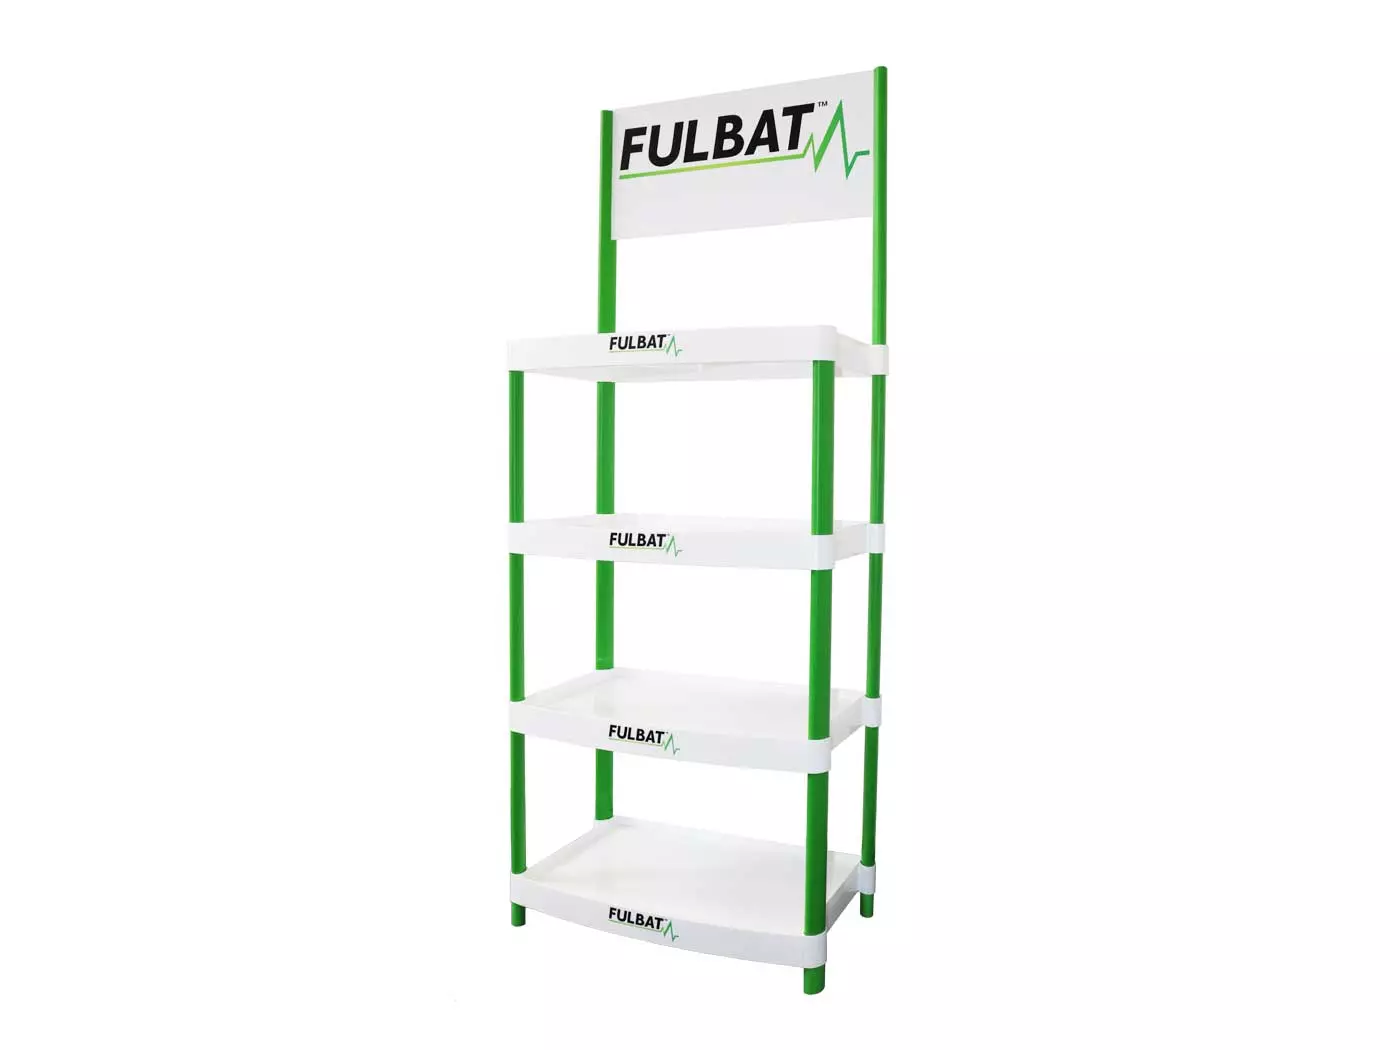 Verkaufs-Display / Dealer Display Fulbat voor Produktpräsentation im Ladenlokal